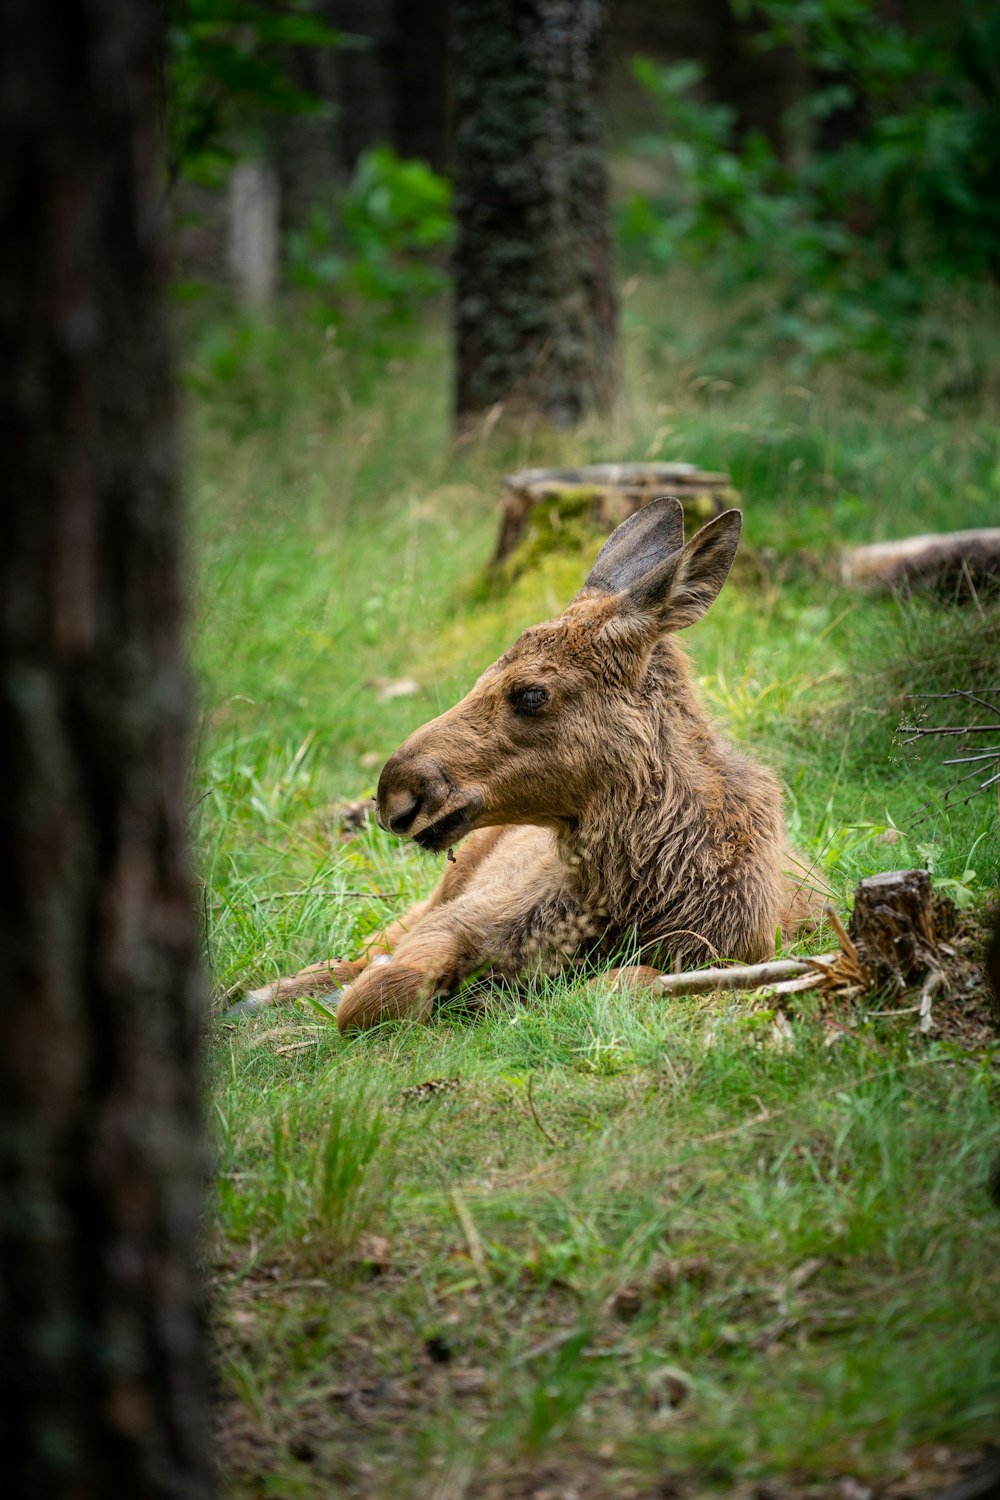 brown deer lying on green grass during daytime